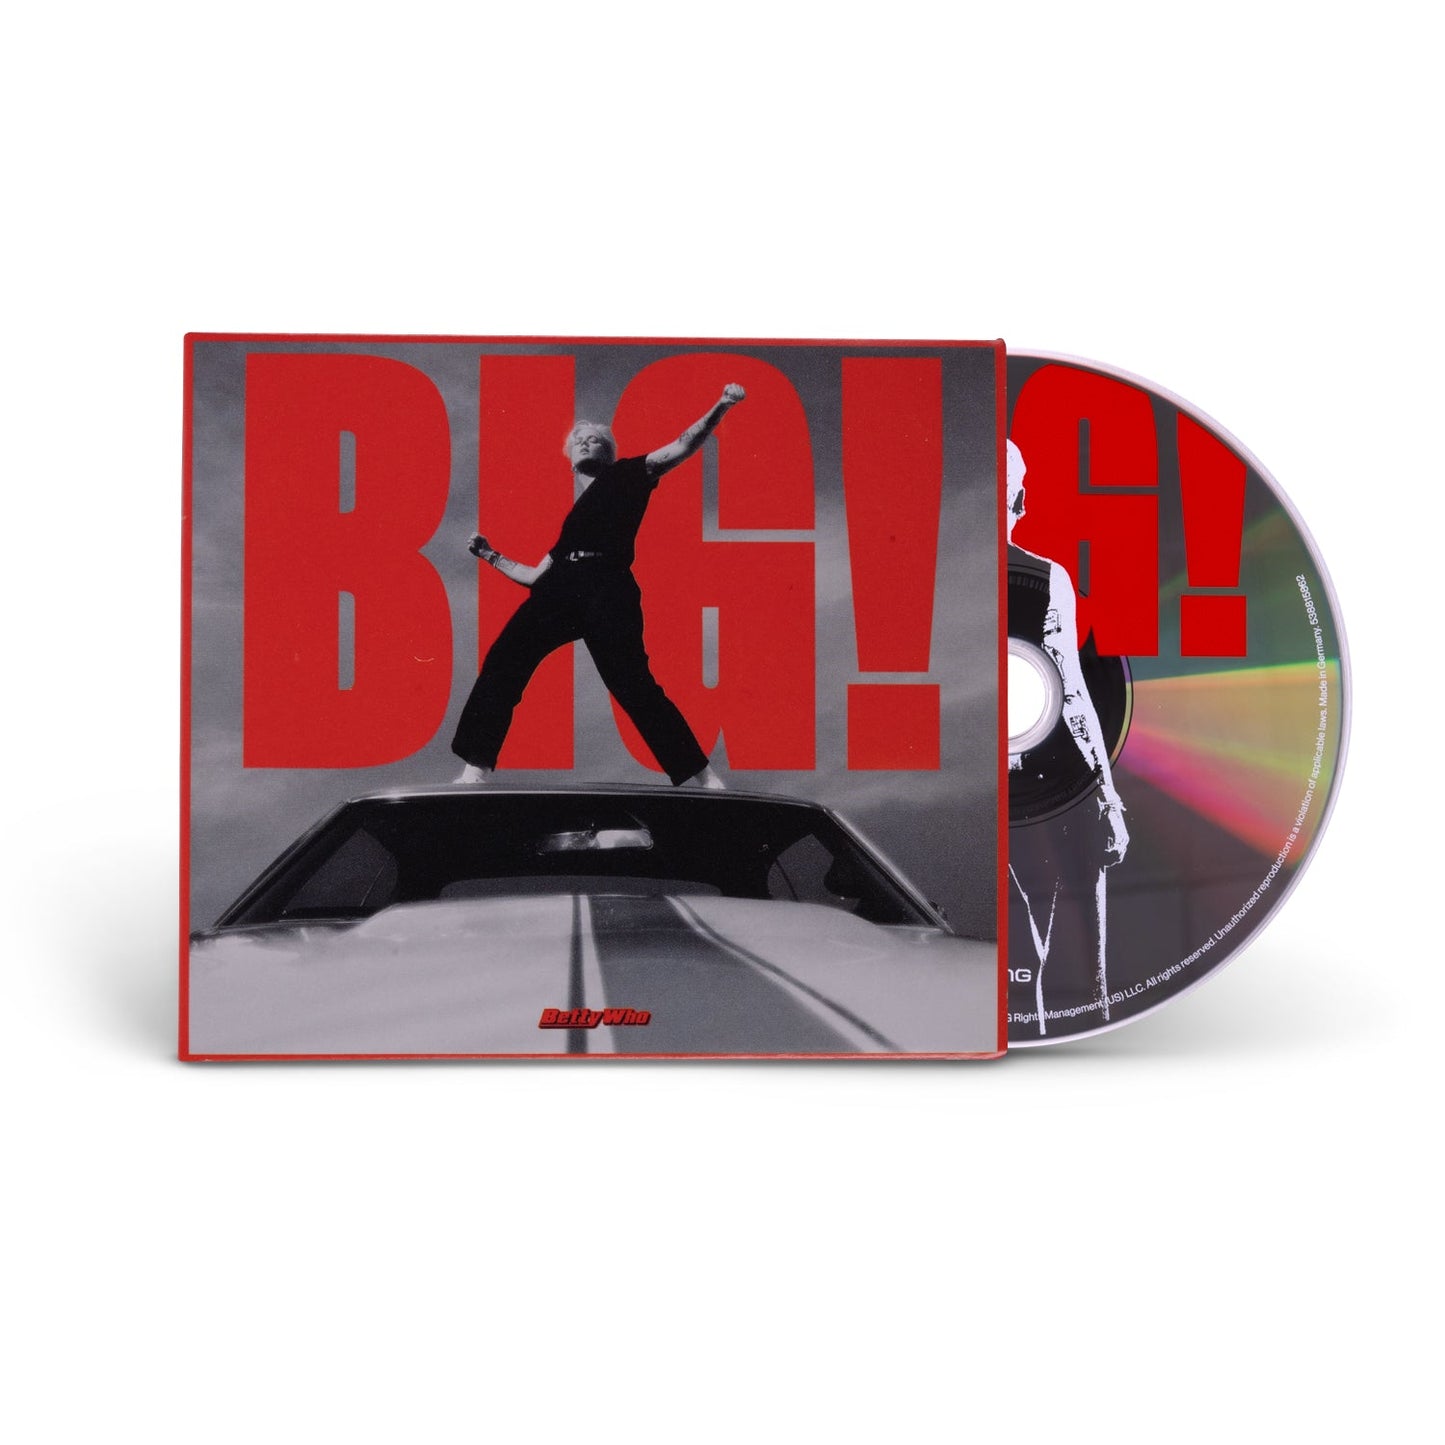 BIG! CD - [AUTOGRAPHED]